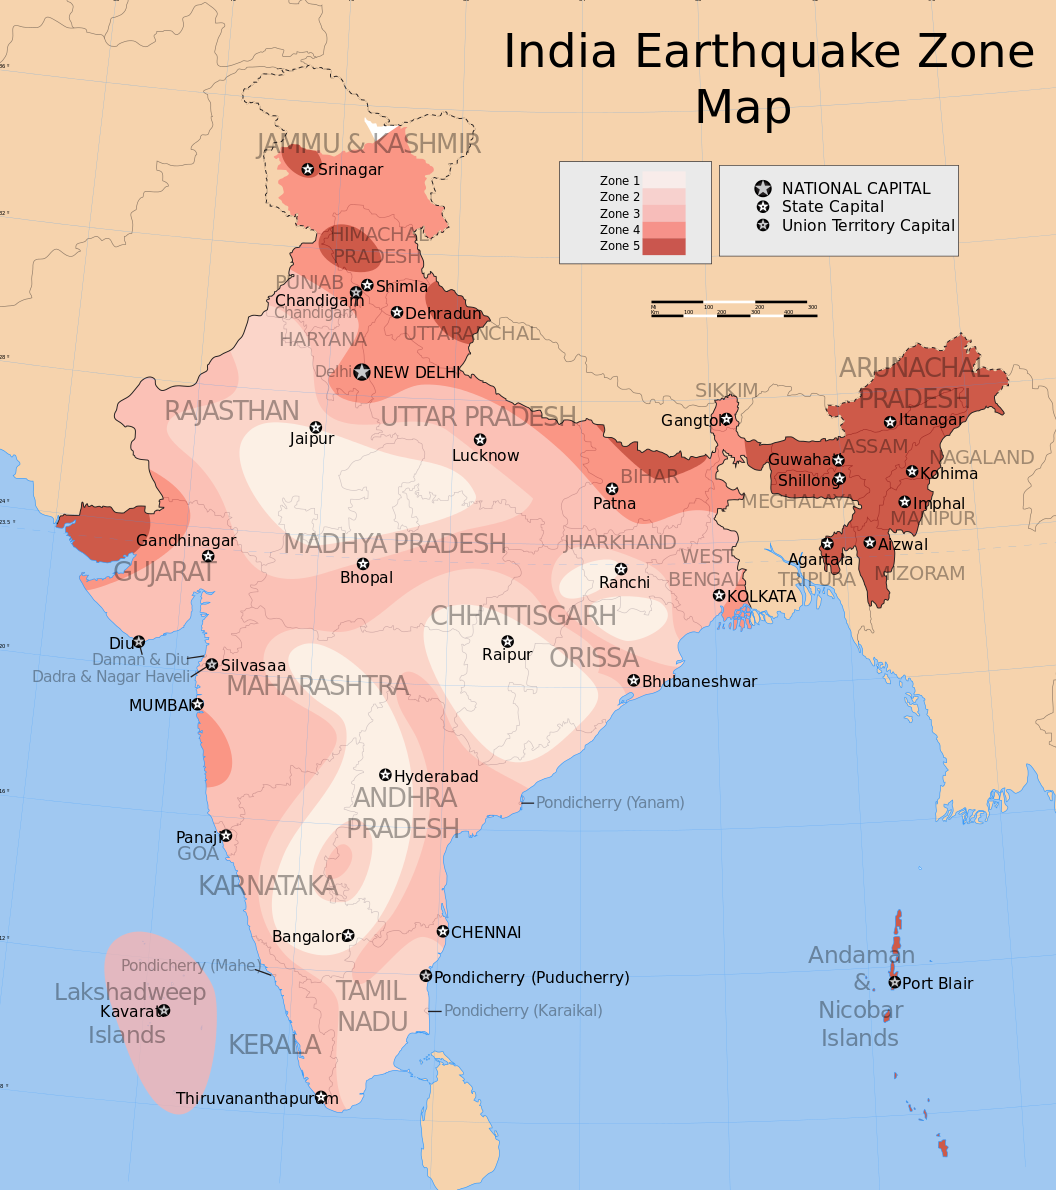 India earthquake zone map english version